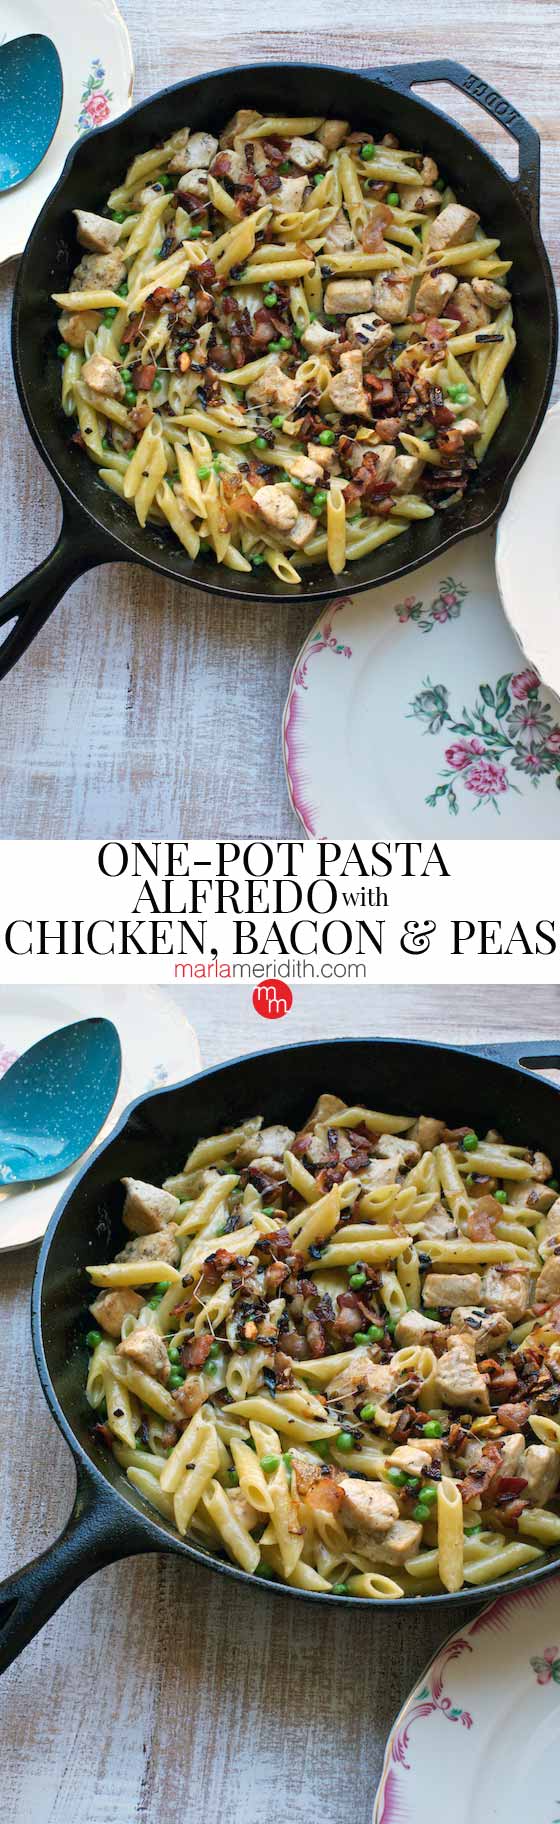 One-Pot Pasta Alfredo with Chicken, Bacon & Peas recipe. So simple to prepare and delicious! MarlaMeridith.com #recipe #pasta